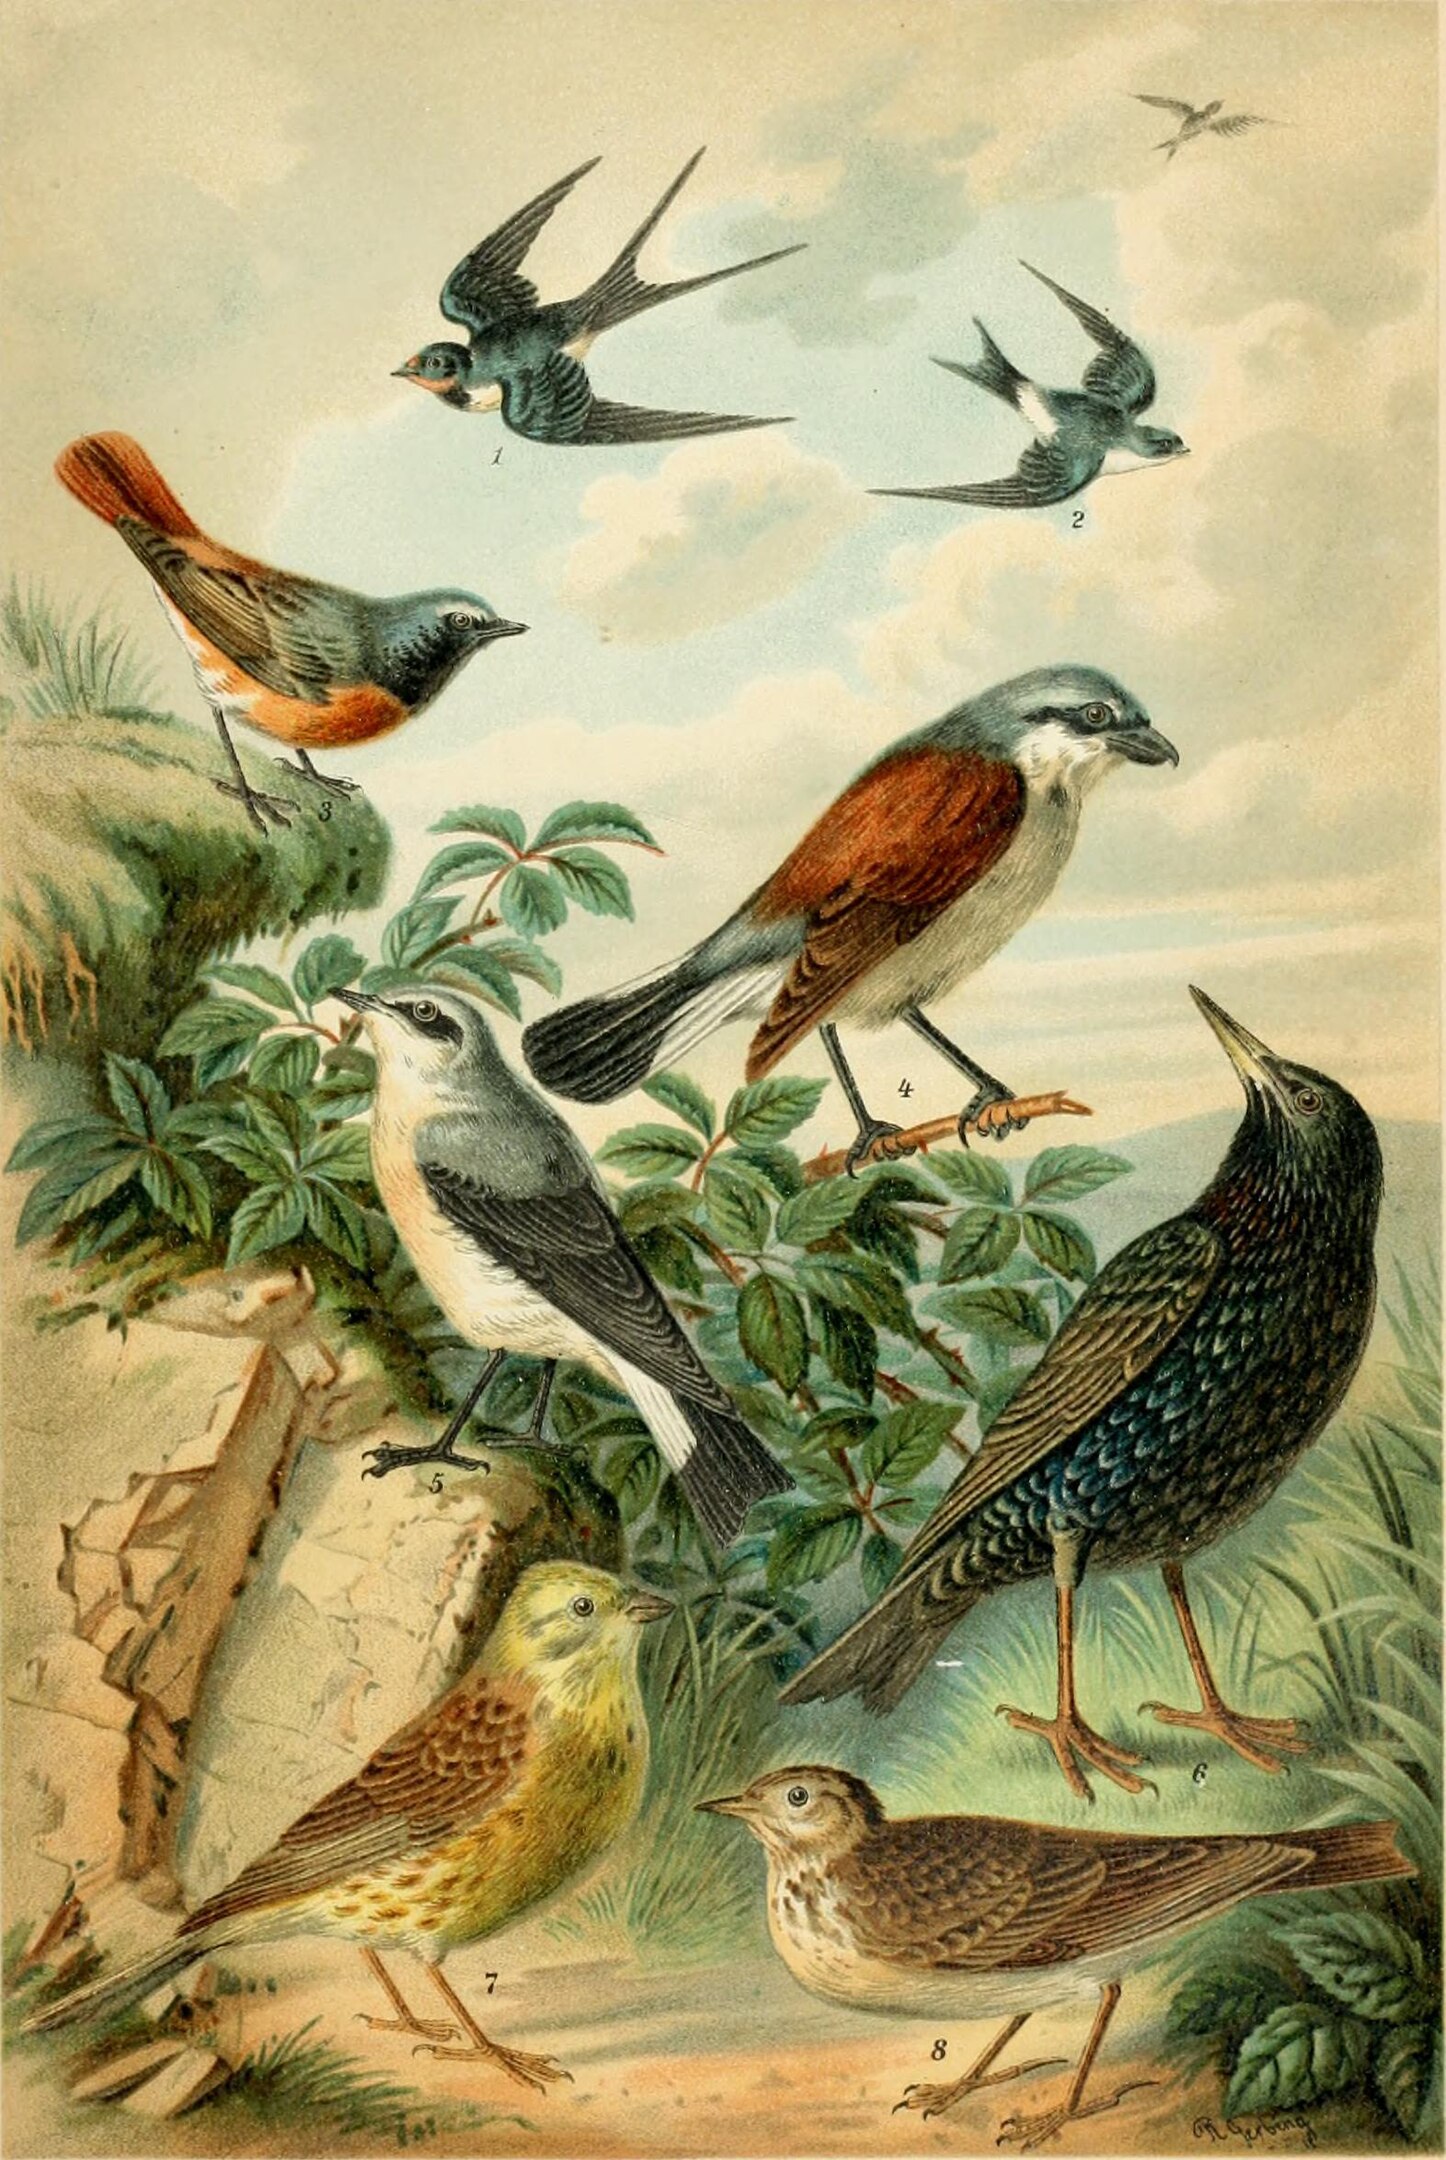 An illustration of various birds